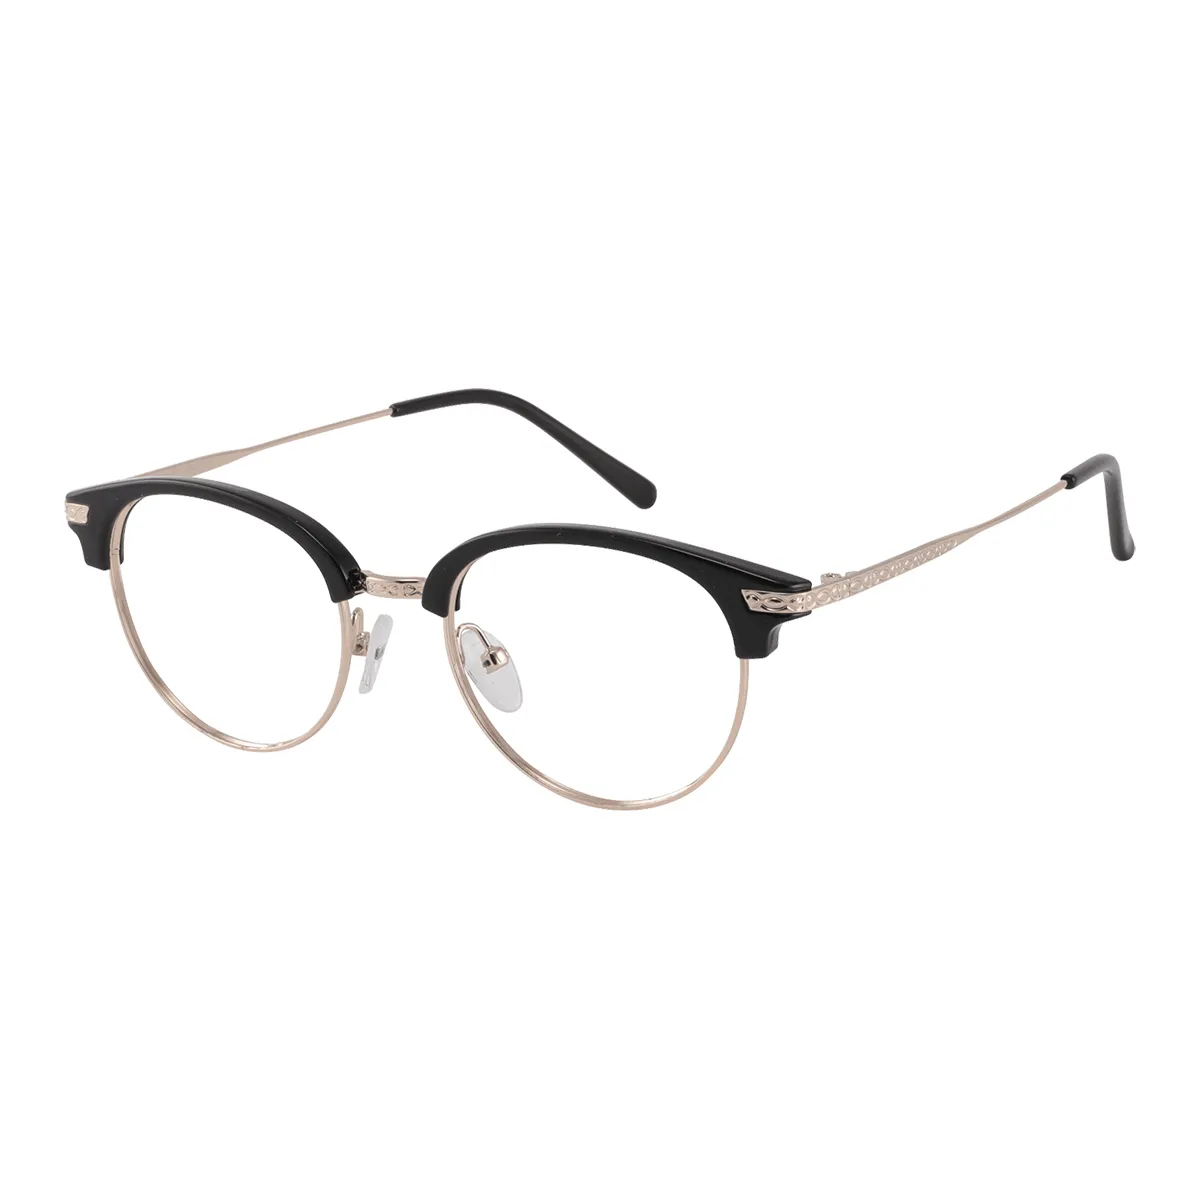 Fashion Browline Black-Gold Reading Glasses for Men & Women